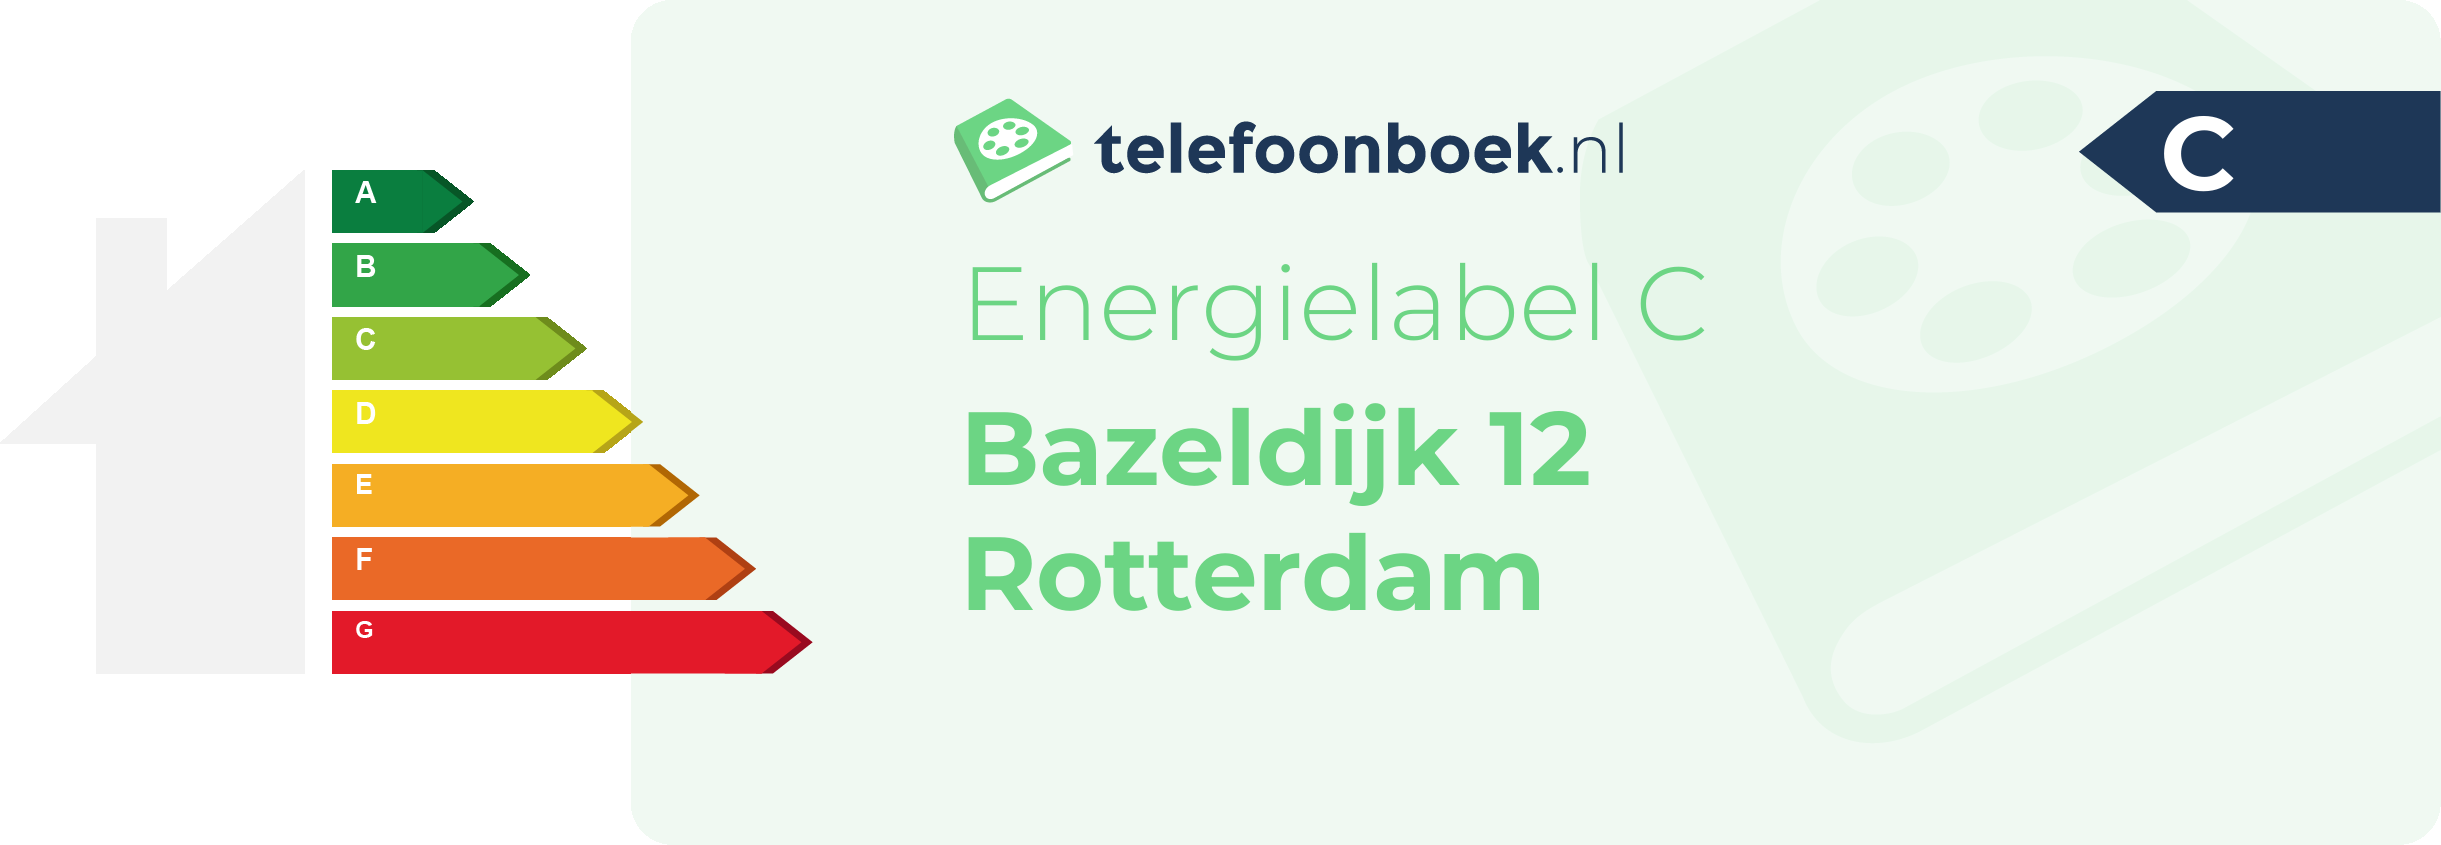 Energielabel Bazeldijk 12 Rotterdam